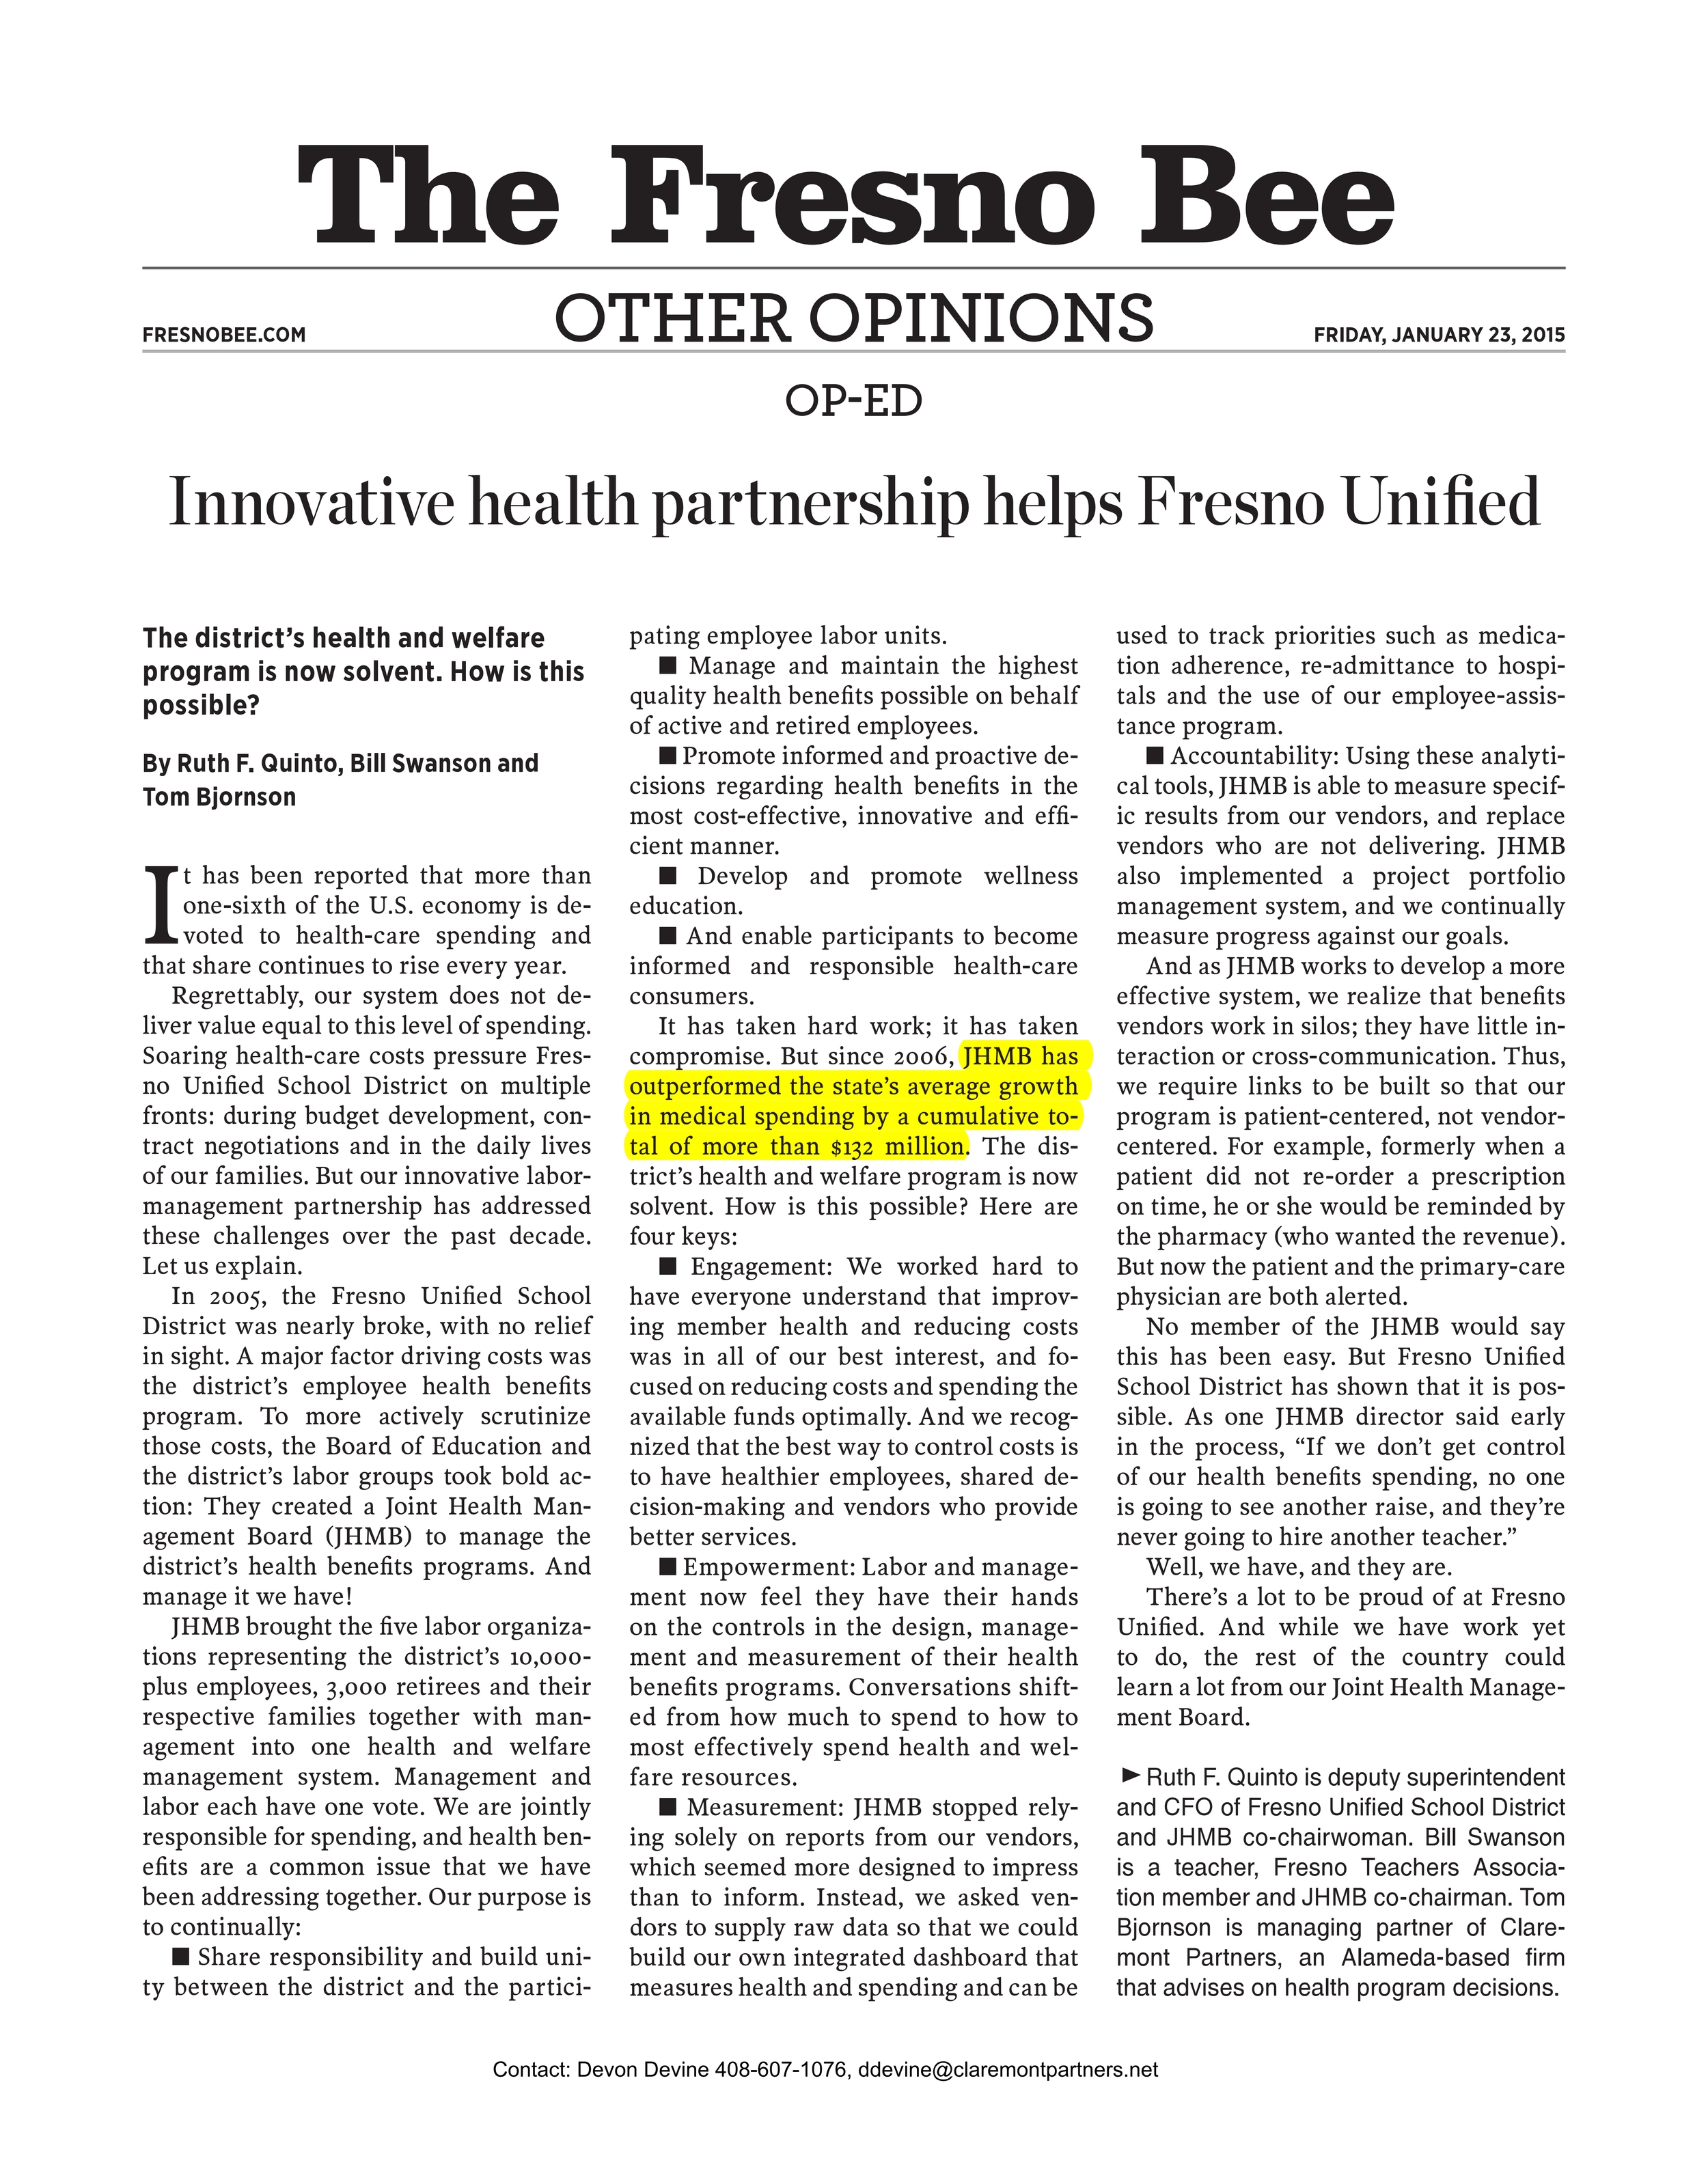 Innovative health partnership